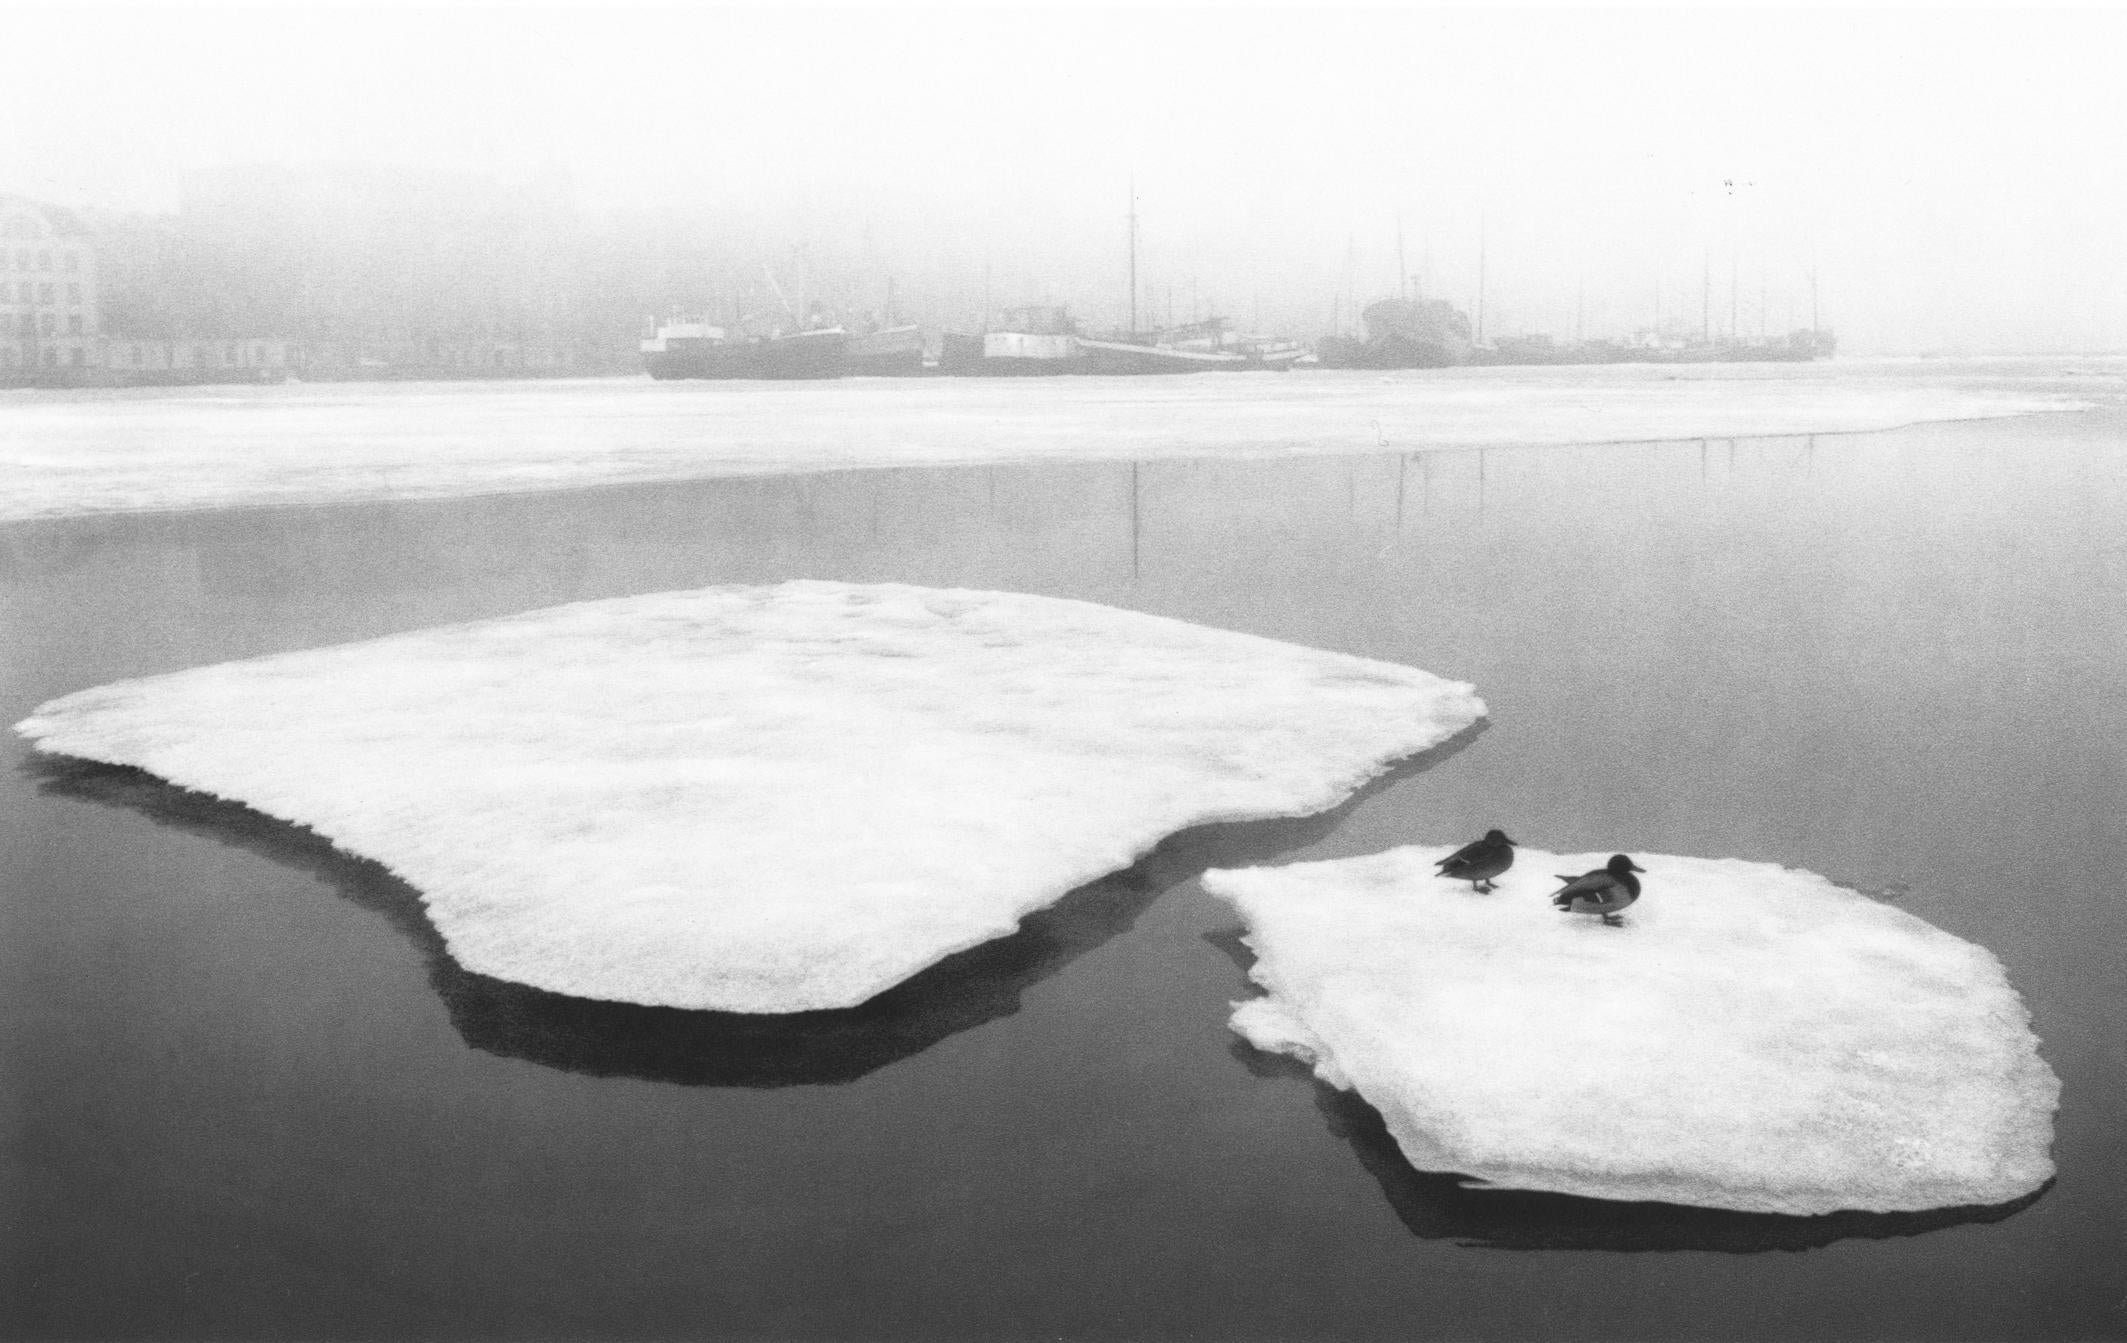 Helsinki, Finland (Ducks On Floating Ice)